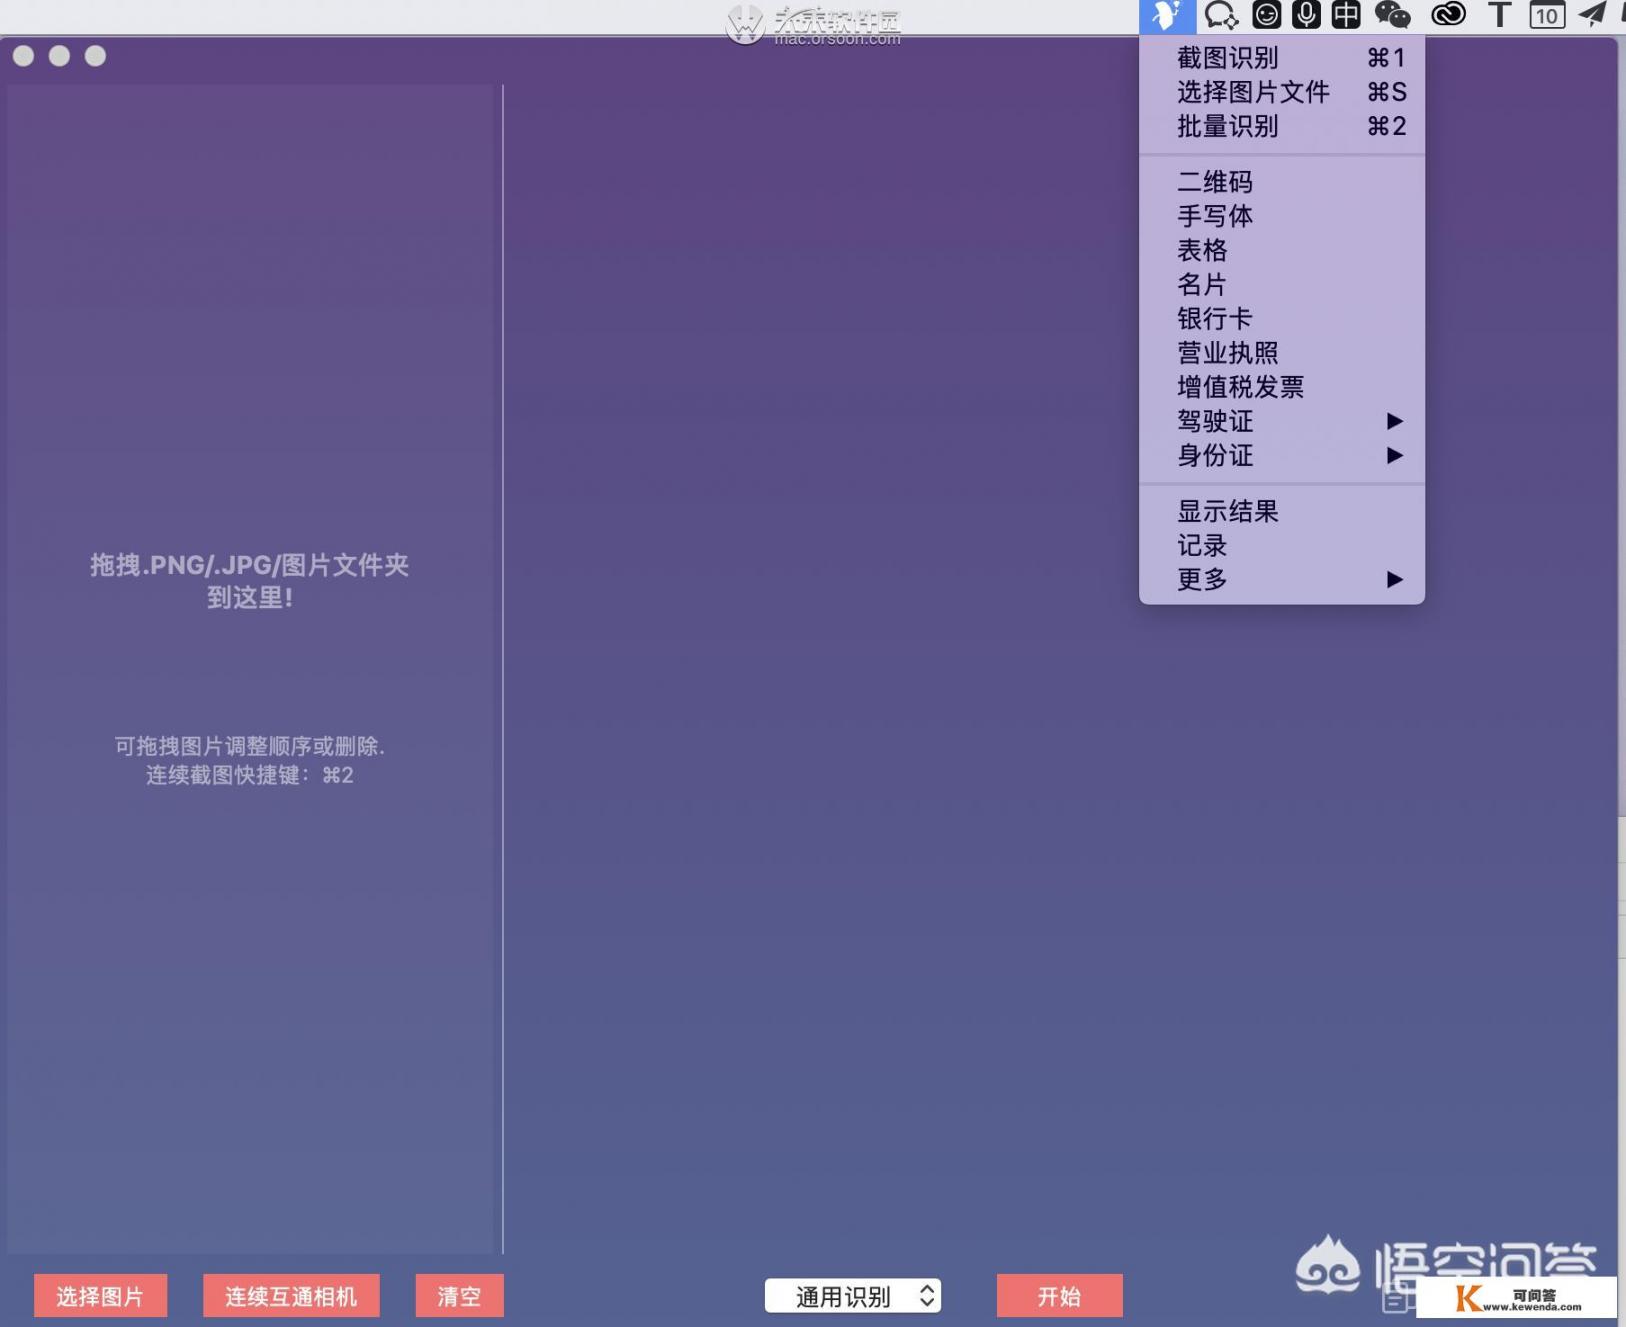 Mac版的ocr截图翻译工具哪个好用点